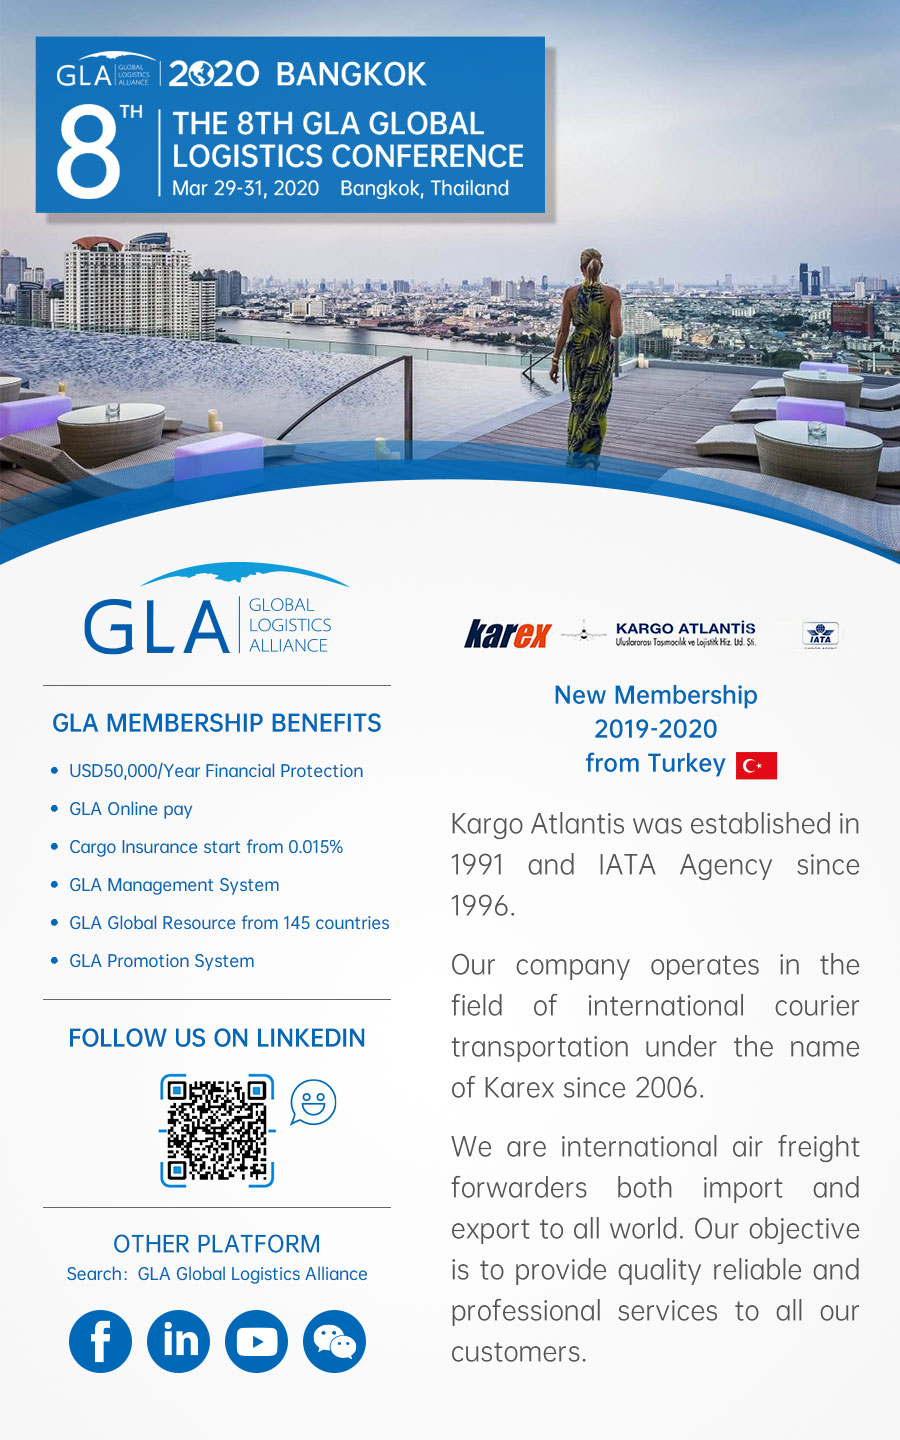 GLA New Memebership — Kargo Atlantis International Logistics Co., Ltd from Turkey